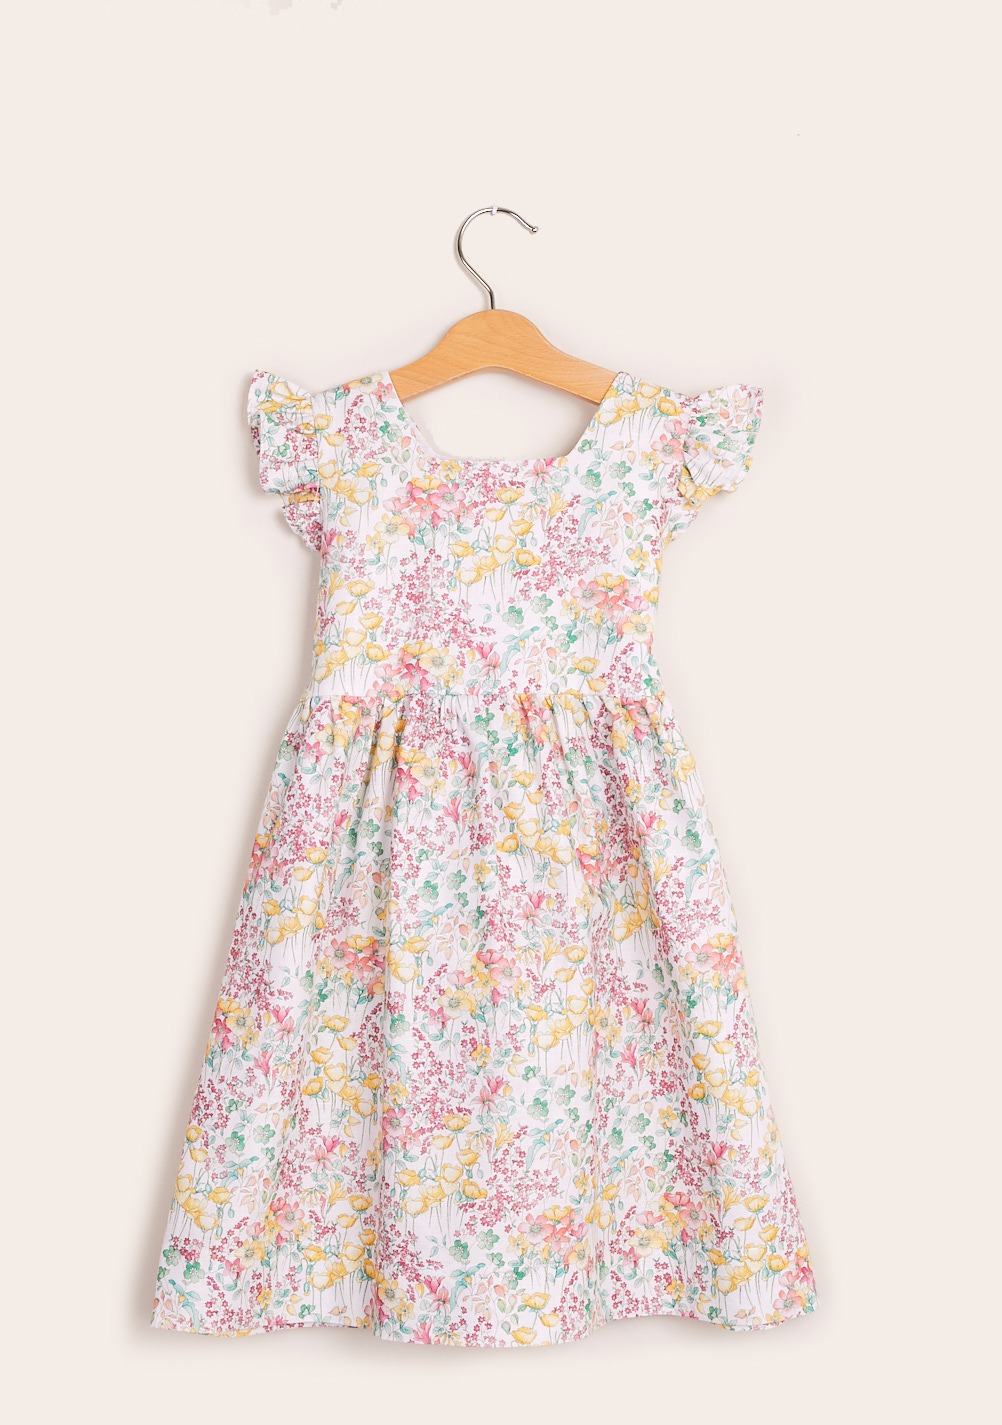 Fiori Gialli E Rosa.I Marmottini Girl S Mille Fiori Emma Printed Dress The